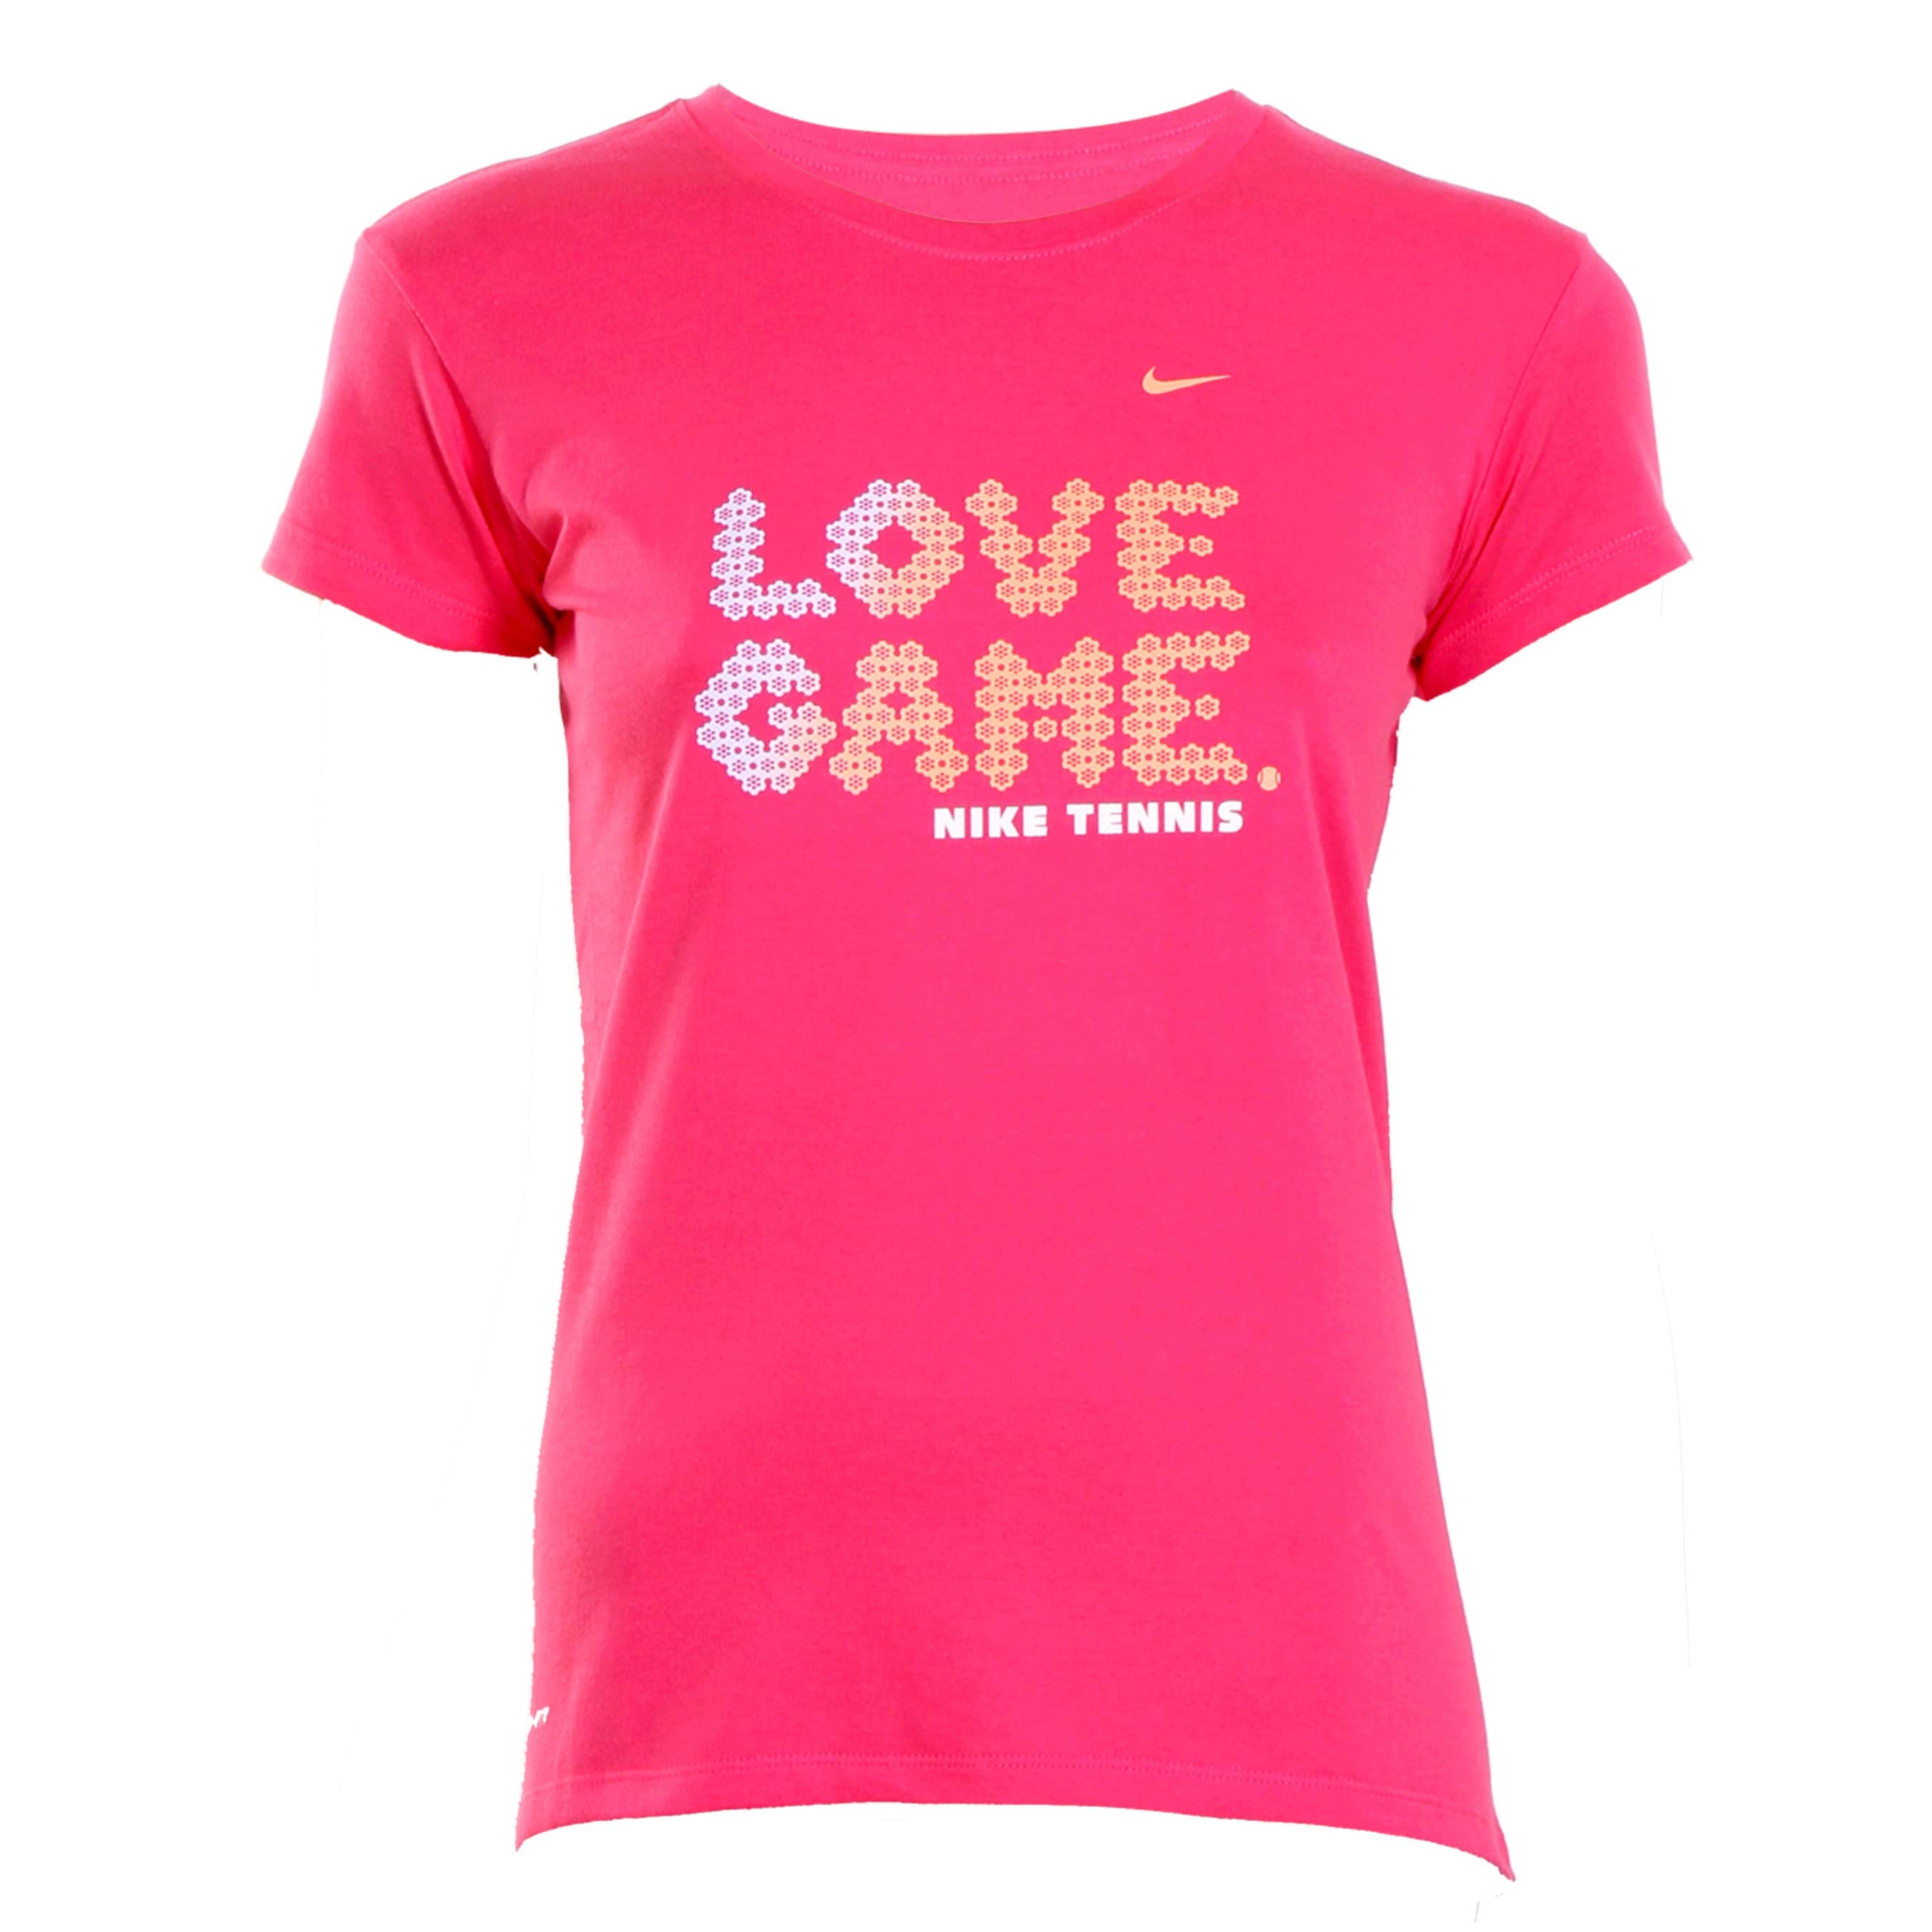 Nike Womens Pink T-shirt